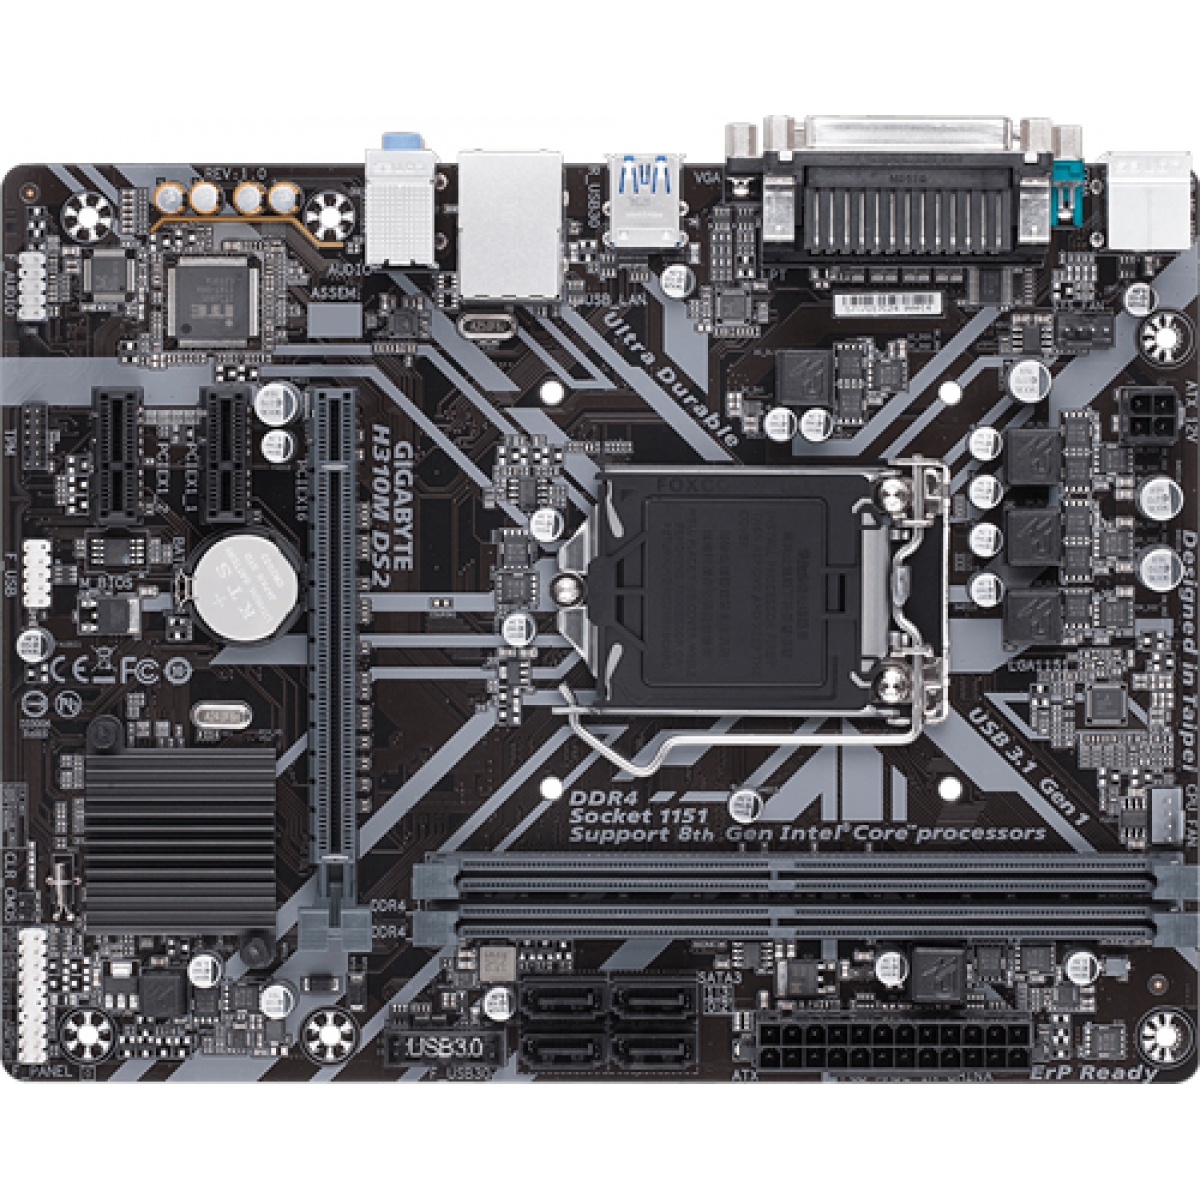 PLACA MÃE Gigabyte H310M-DS2, Chipset H310, Intel LGA 1151, mATX, DDR4